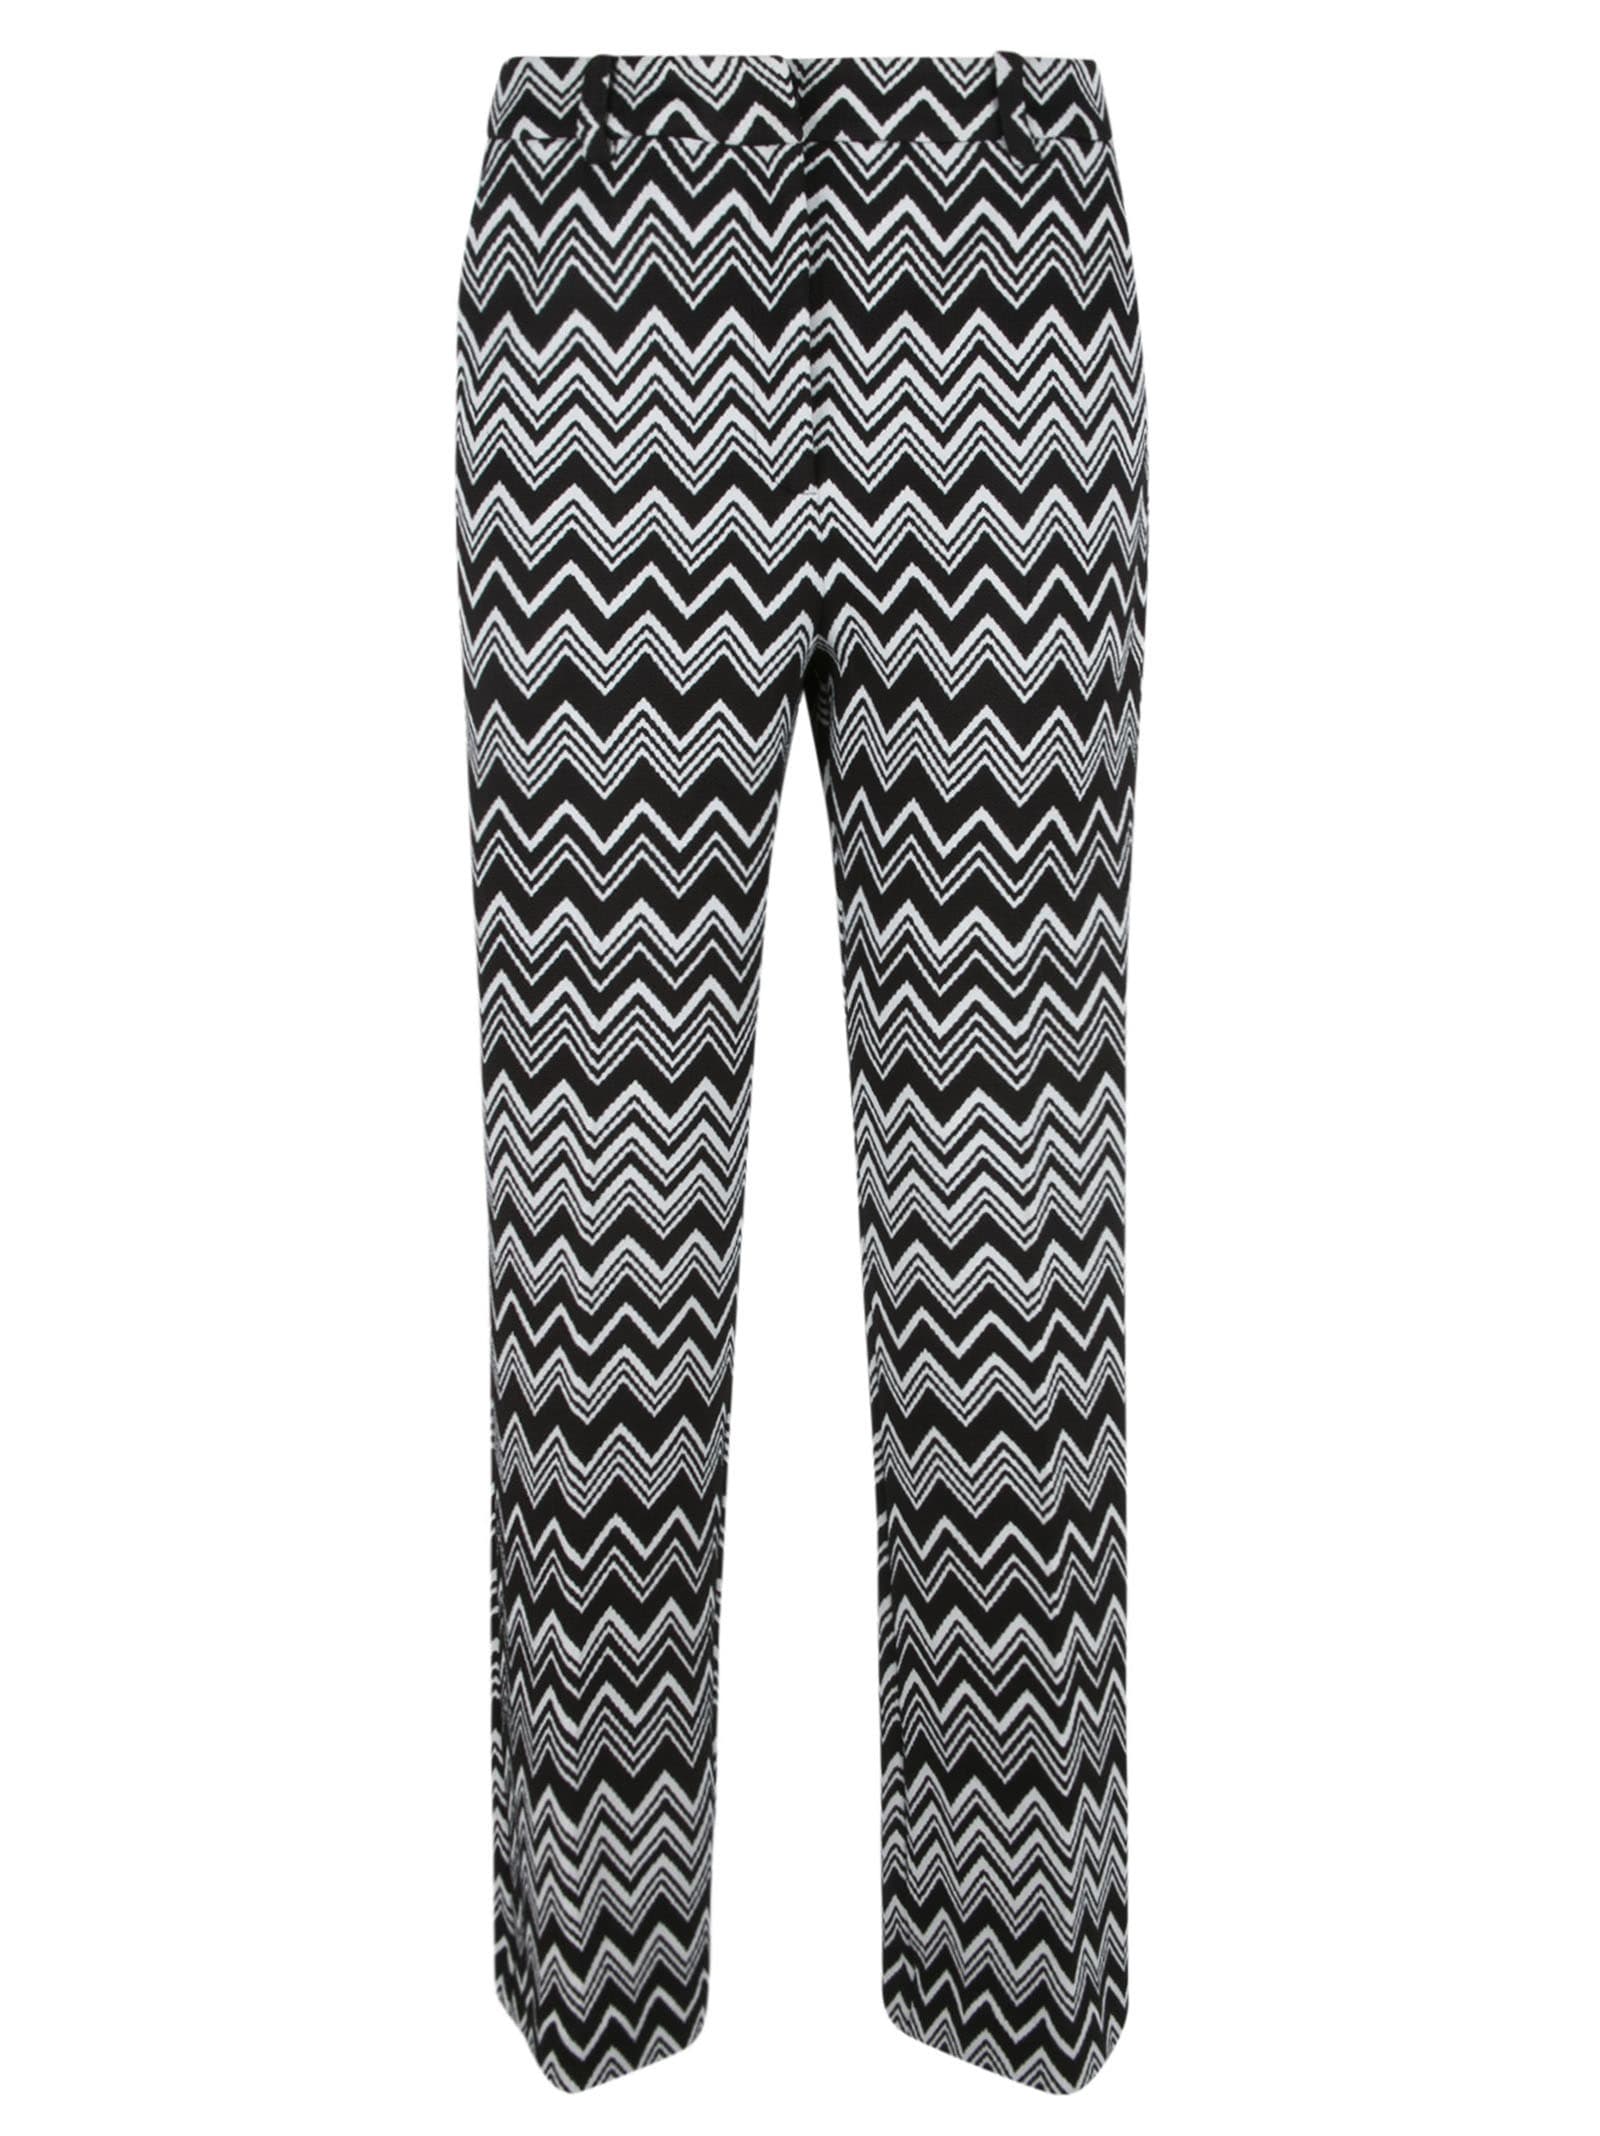 Missoni Zigzag Stripe Patterned Trousers